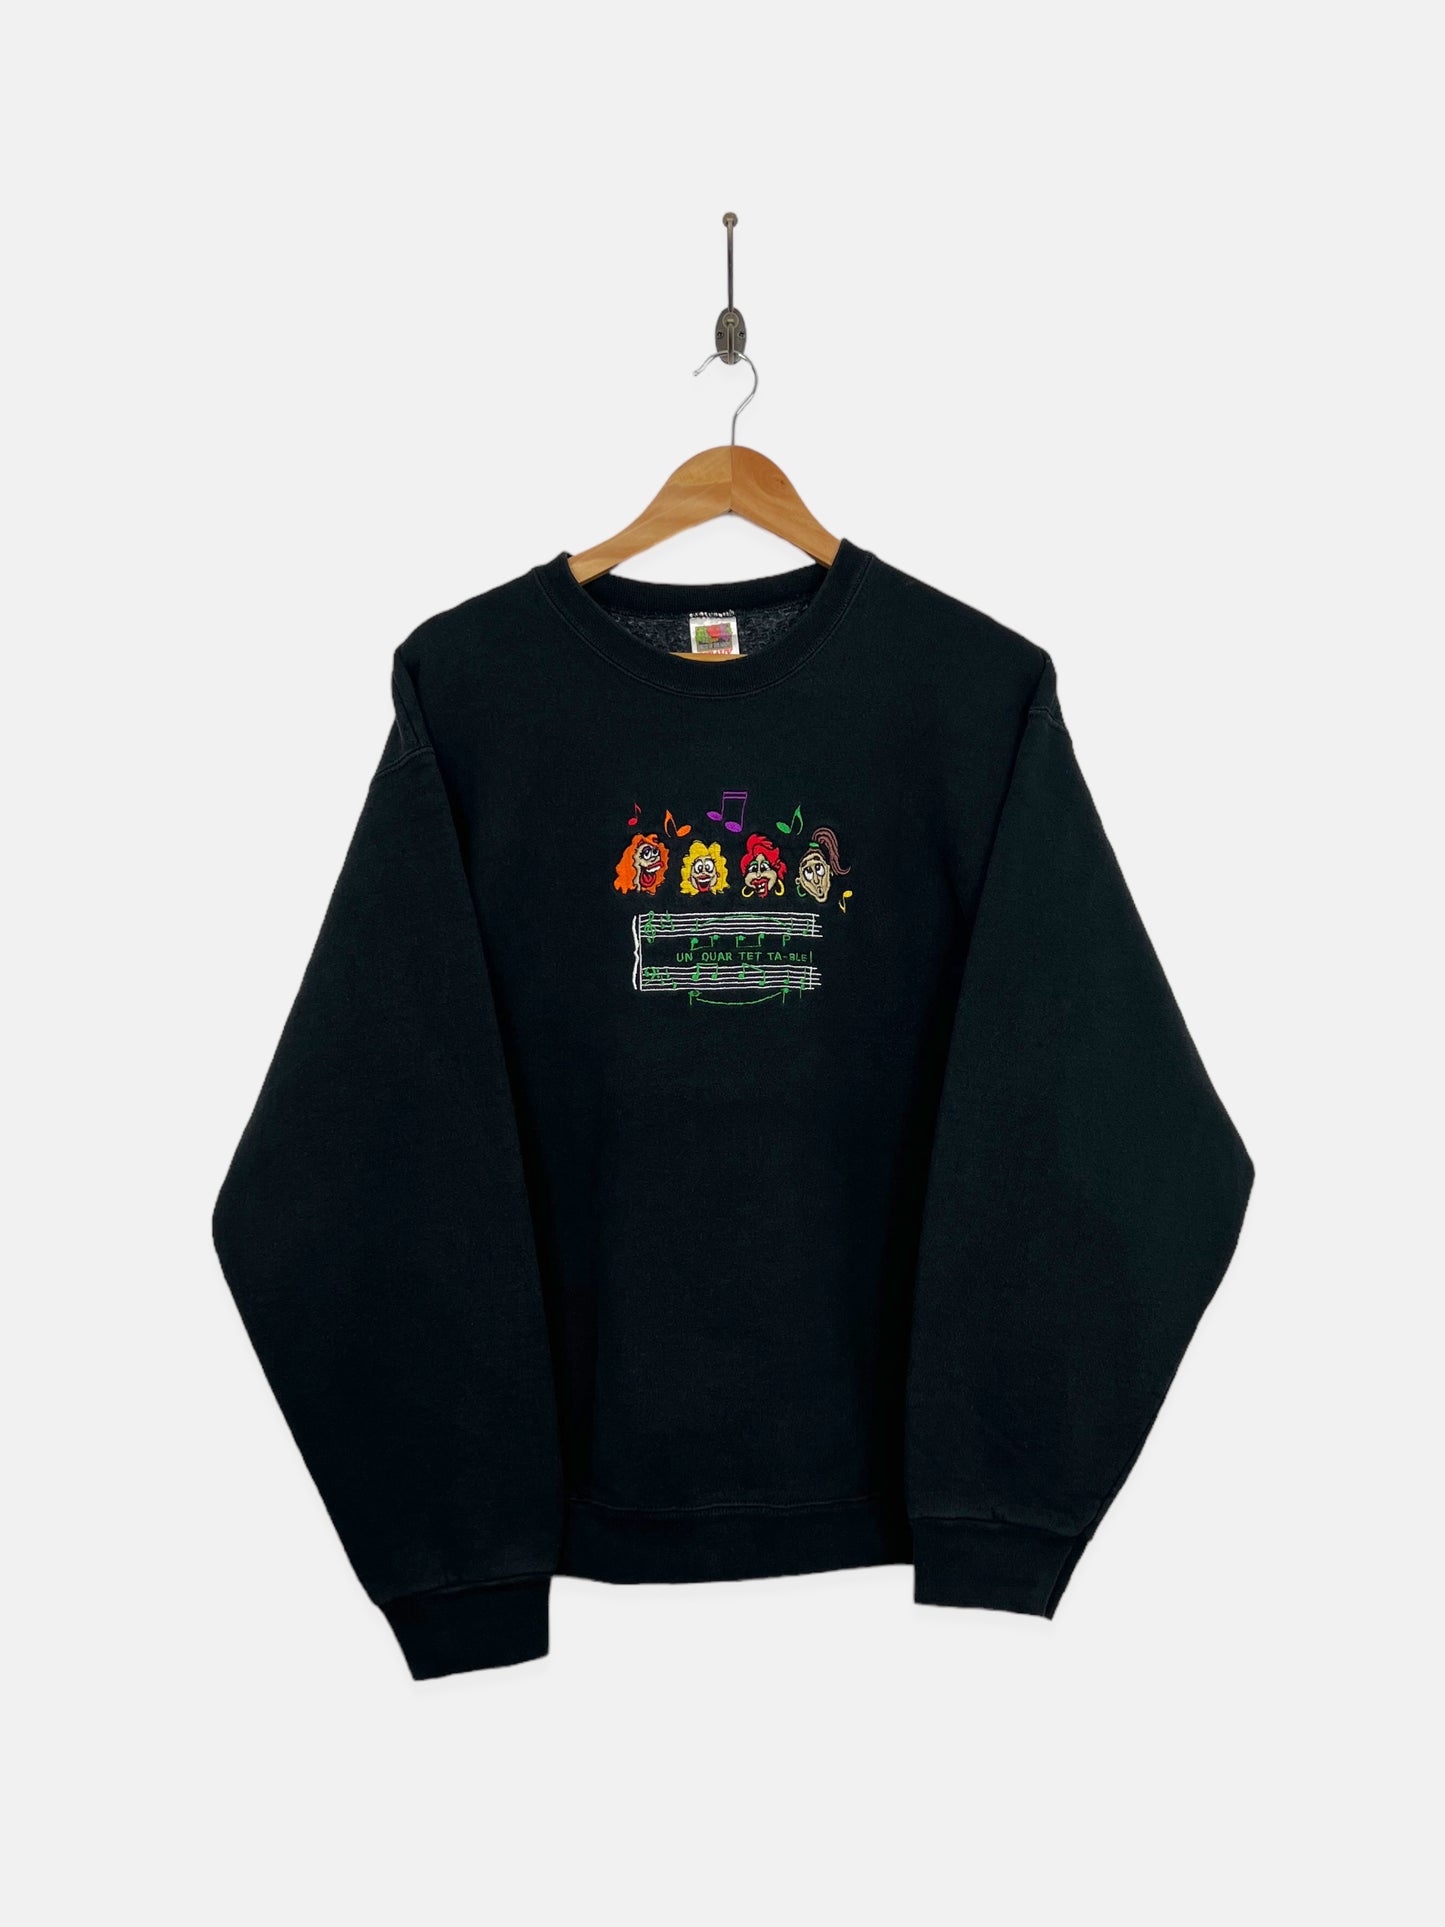 90's Black Embroidered Vintage Sweatshirt Size M